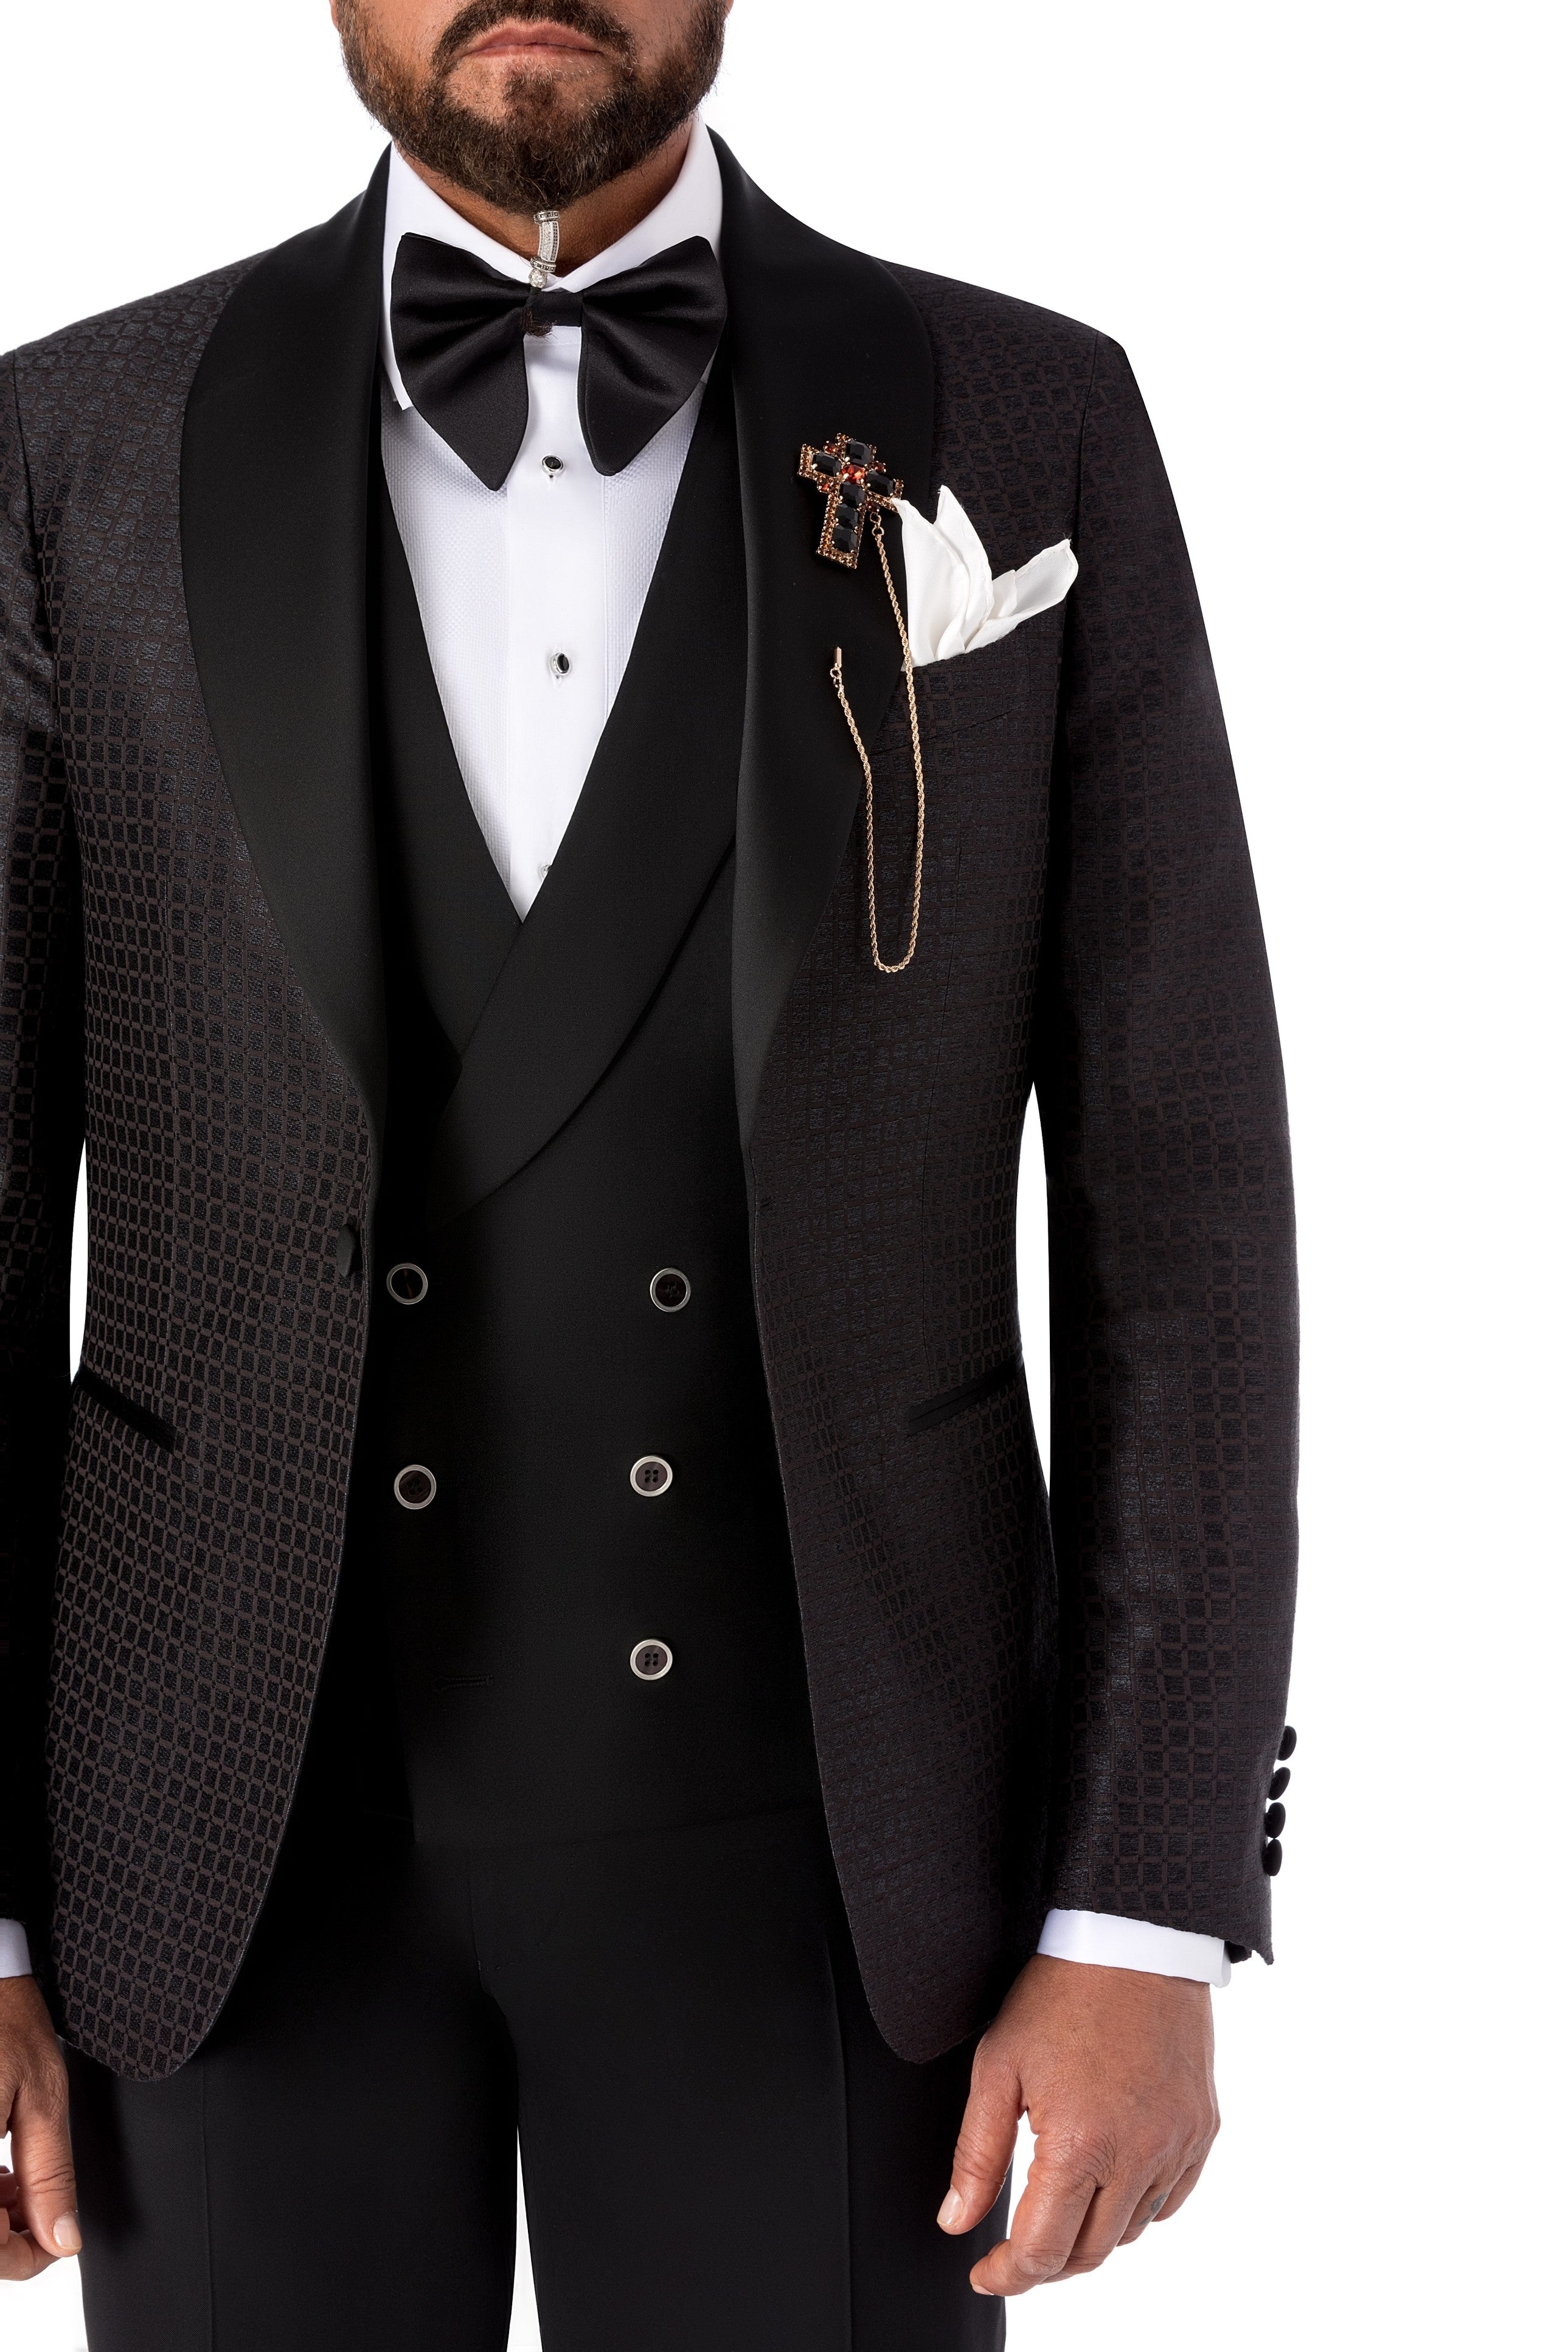 Black silk tuxedo jacket